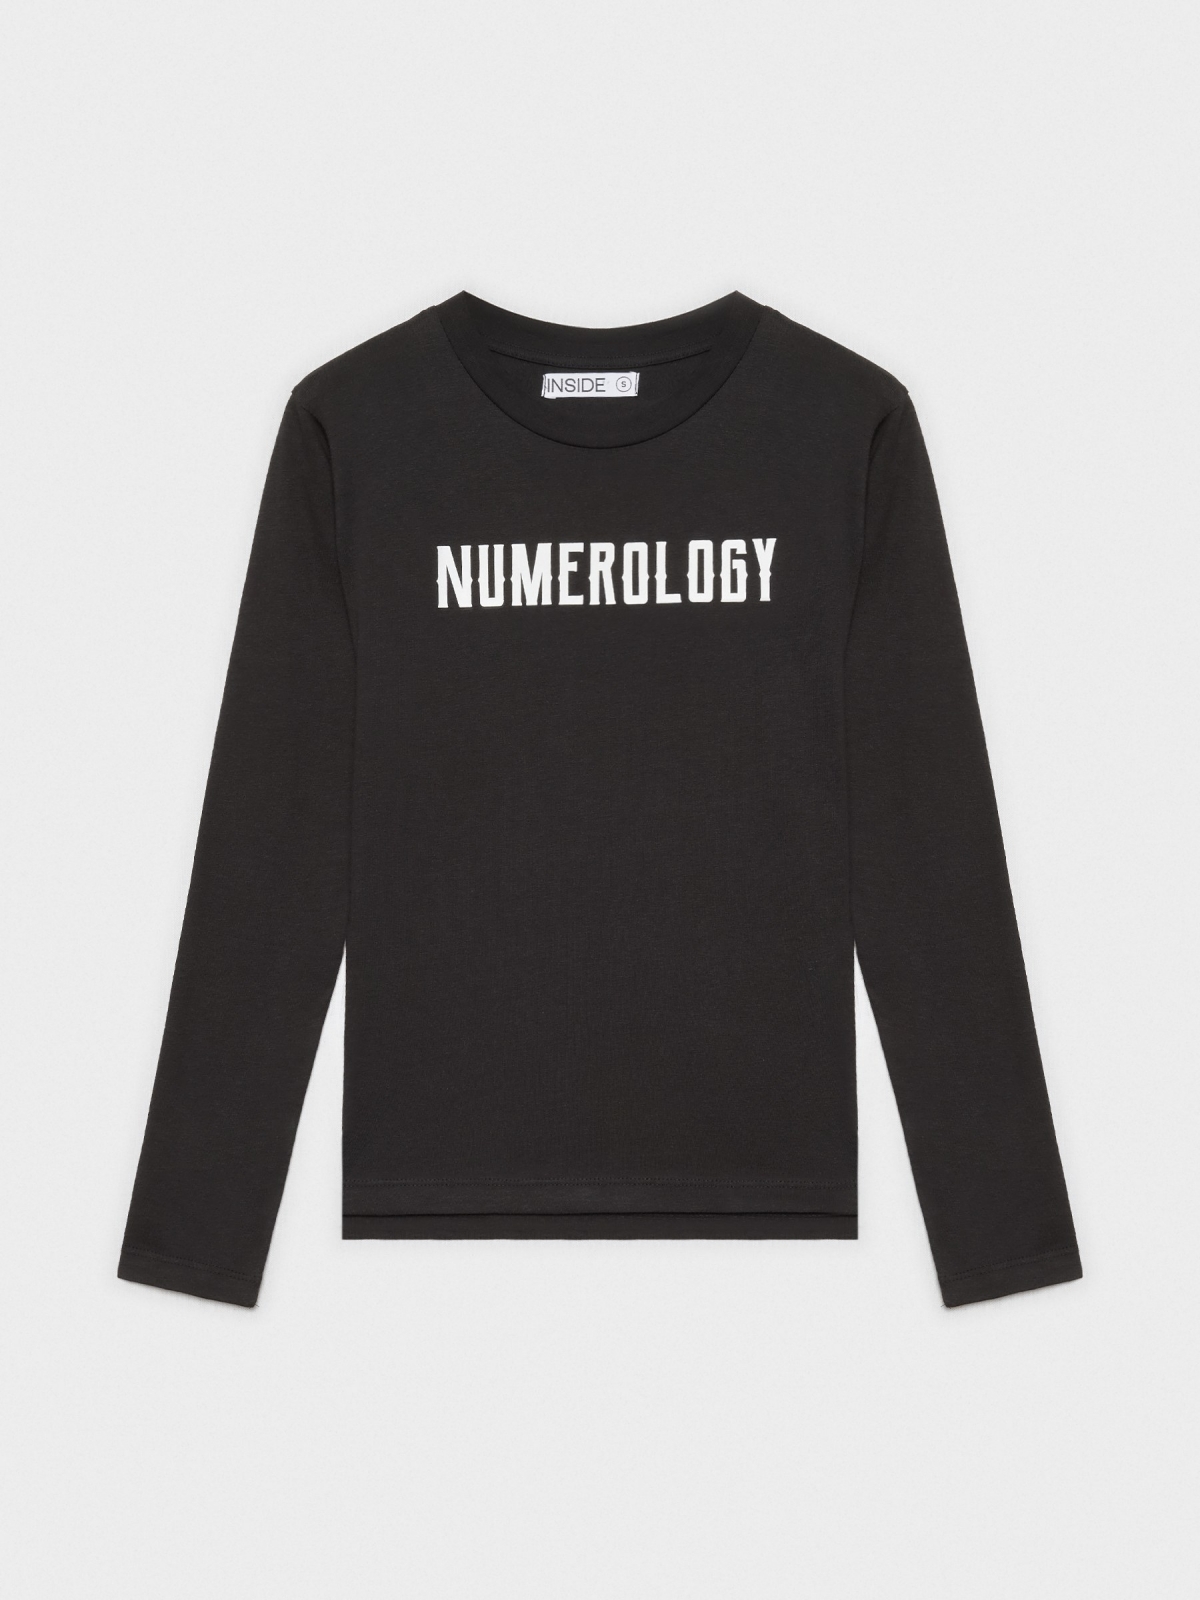  Camiseta negra numerology negro